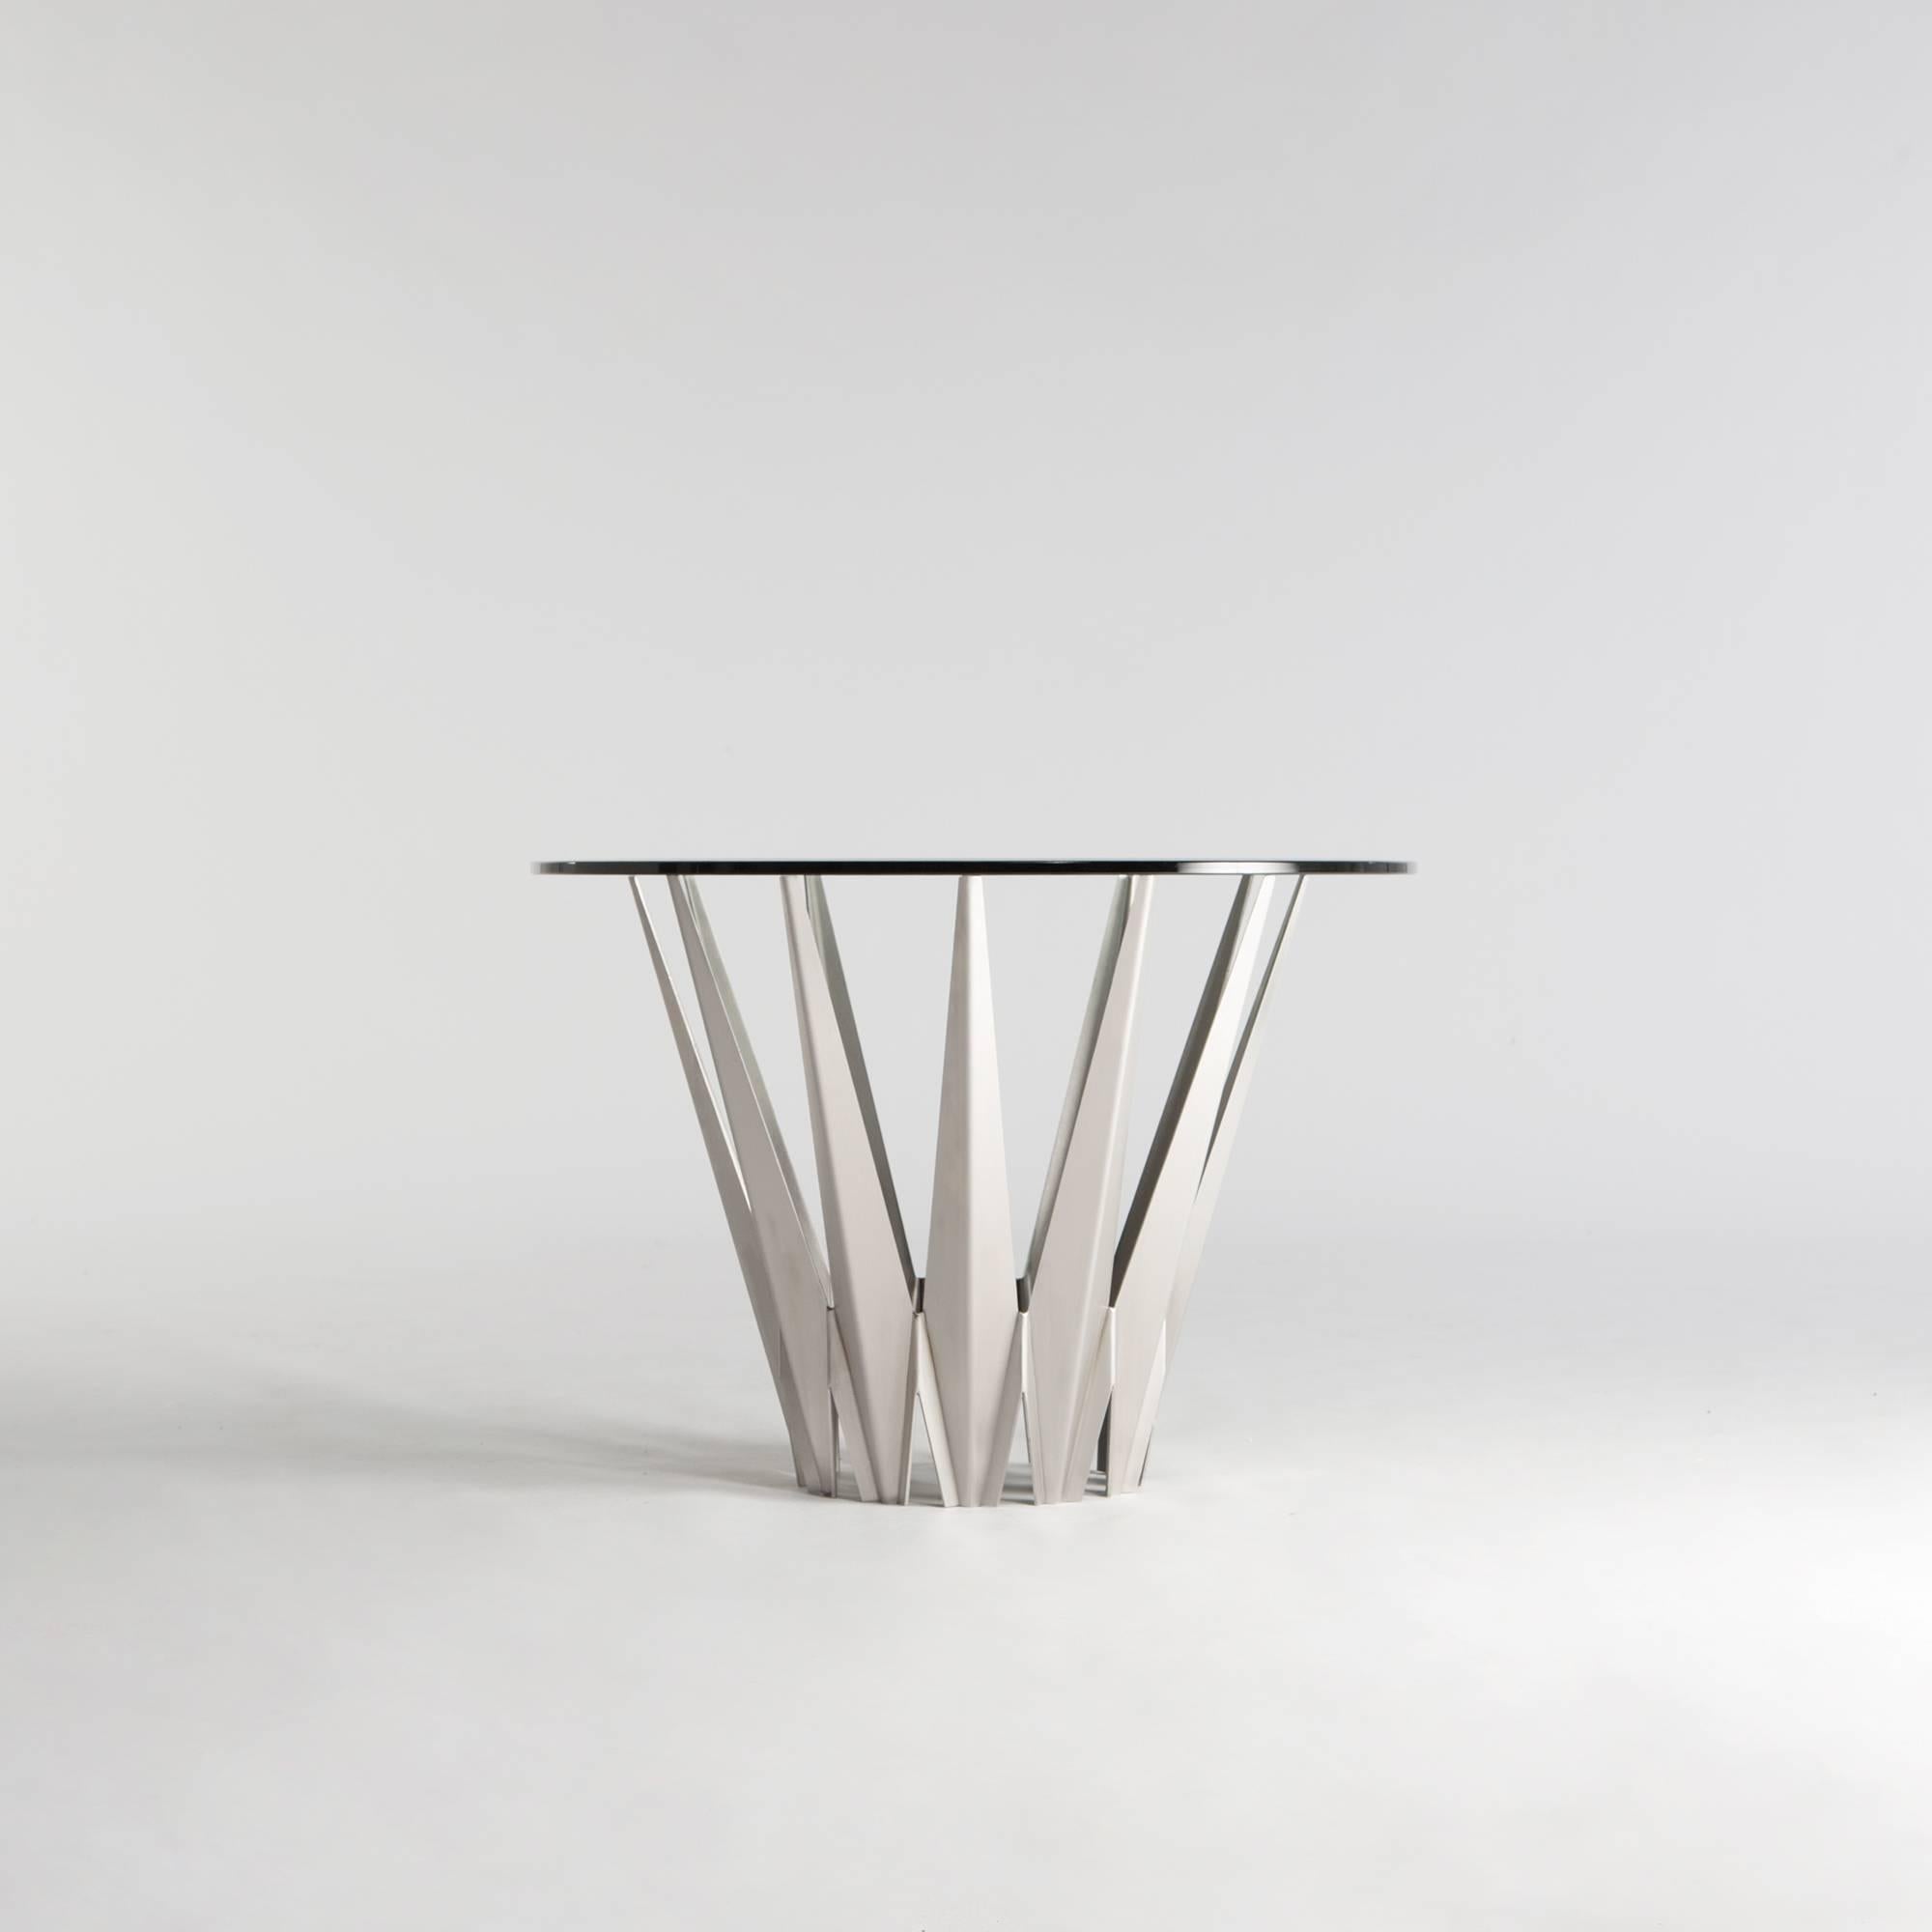 Art Deco Pair of Custom Stainless Steel Krystalline Side Tables / Made to Order